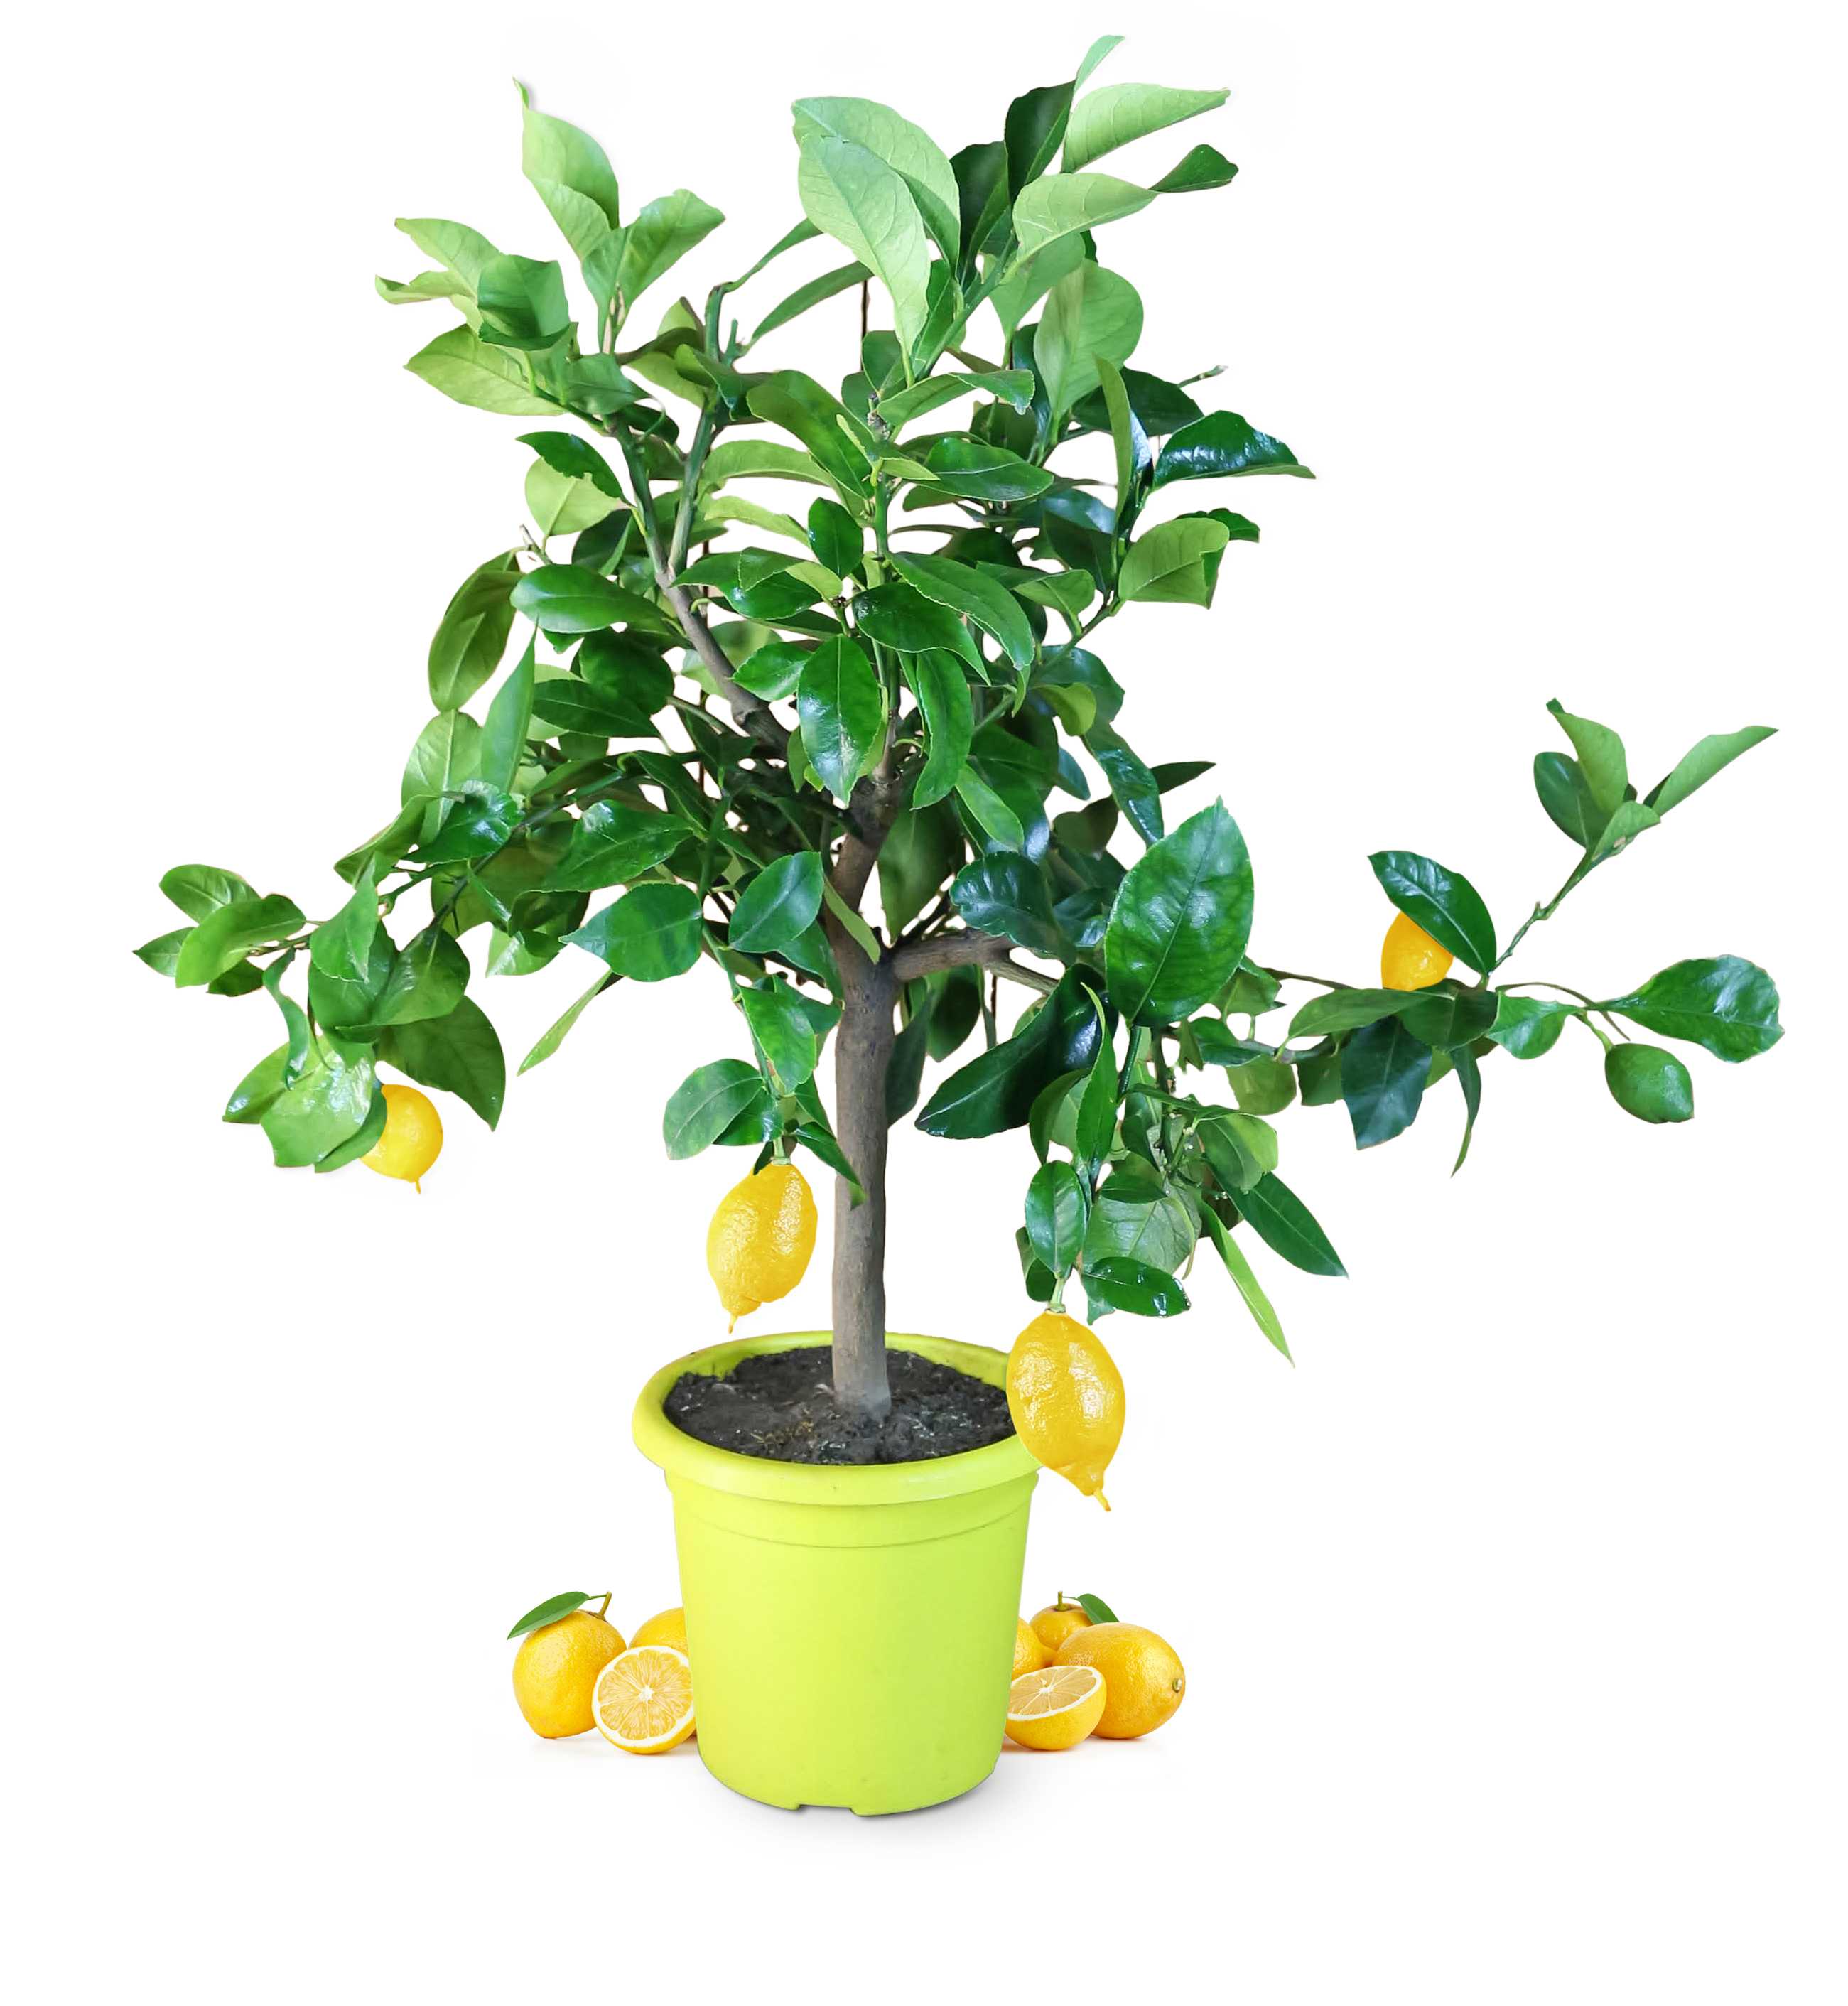 Zitronenbaum [Piccolo]   Citrus limon   echte Zitrone